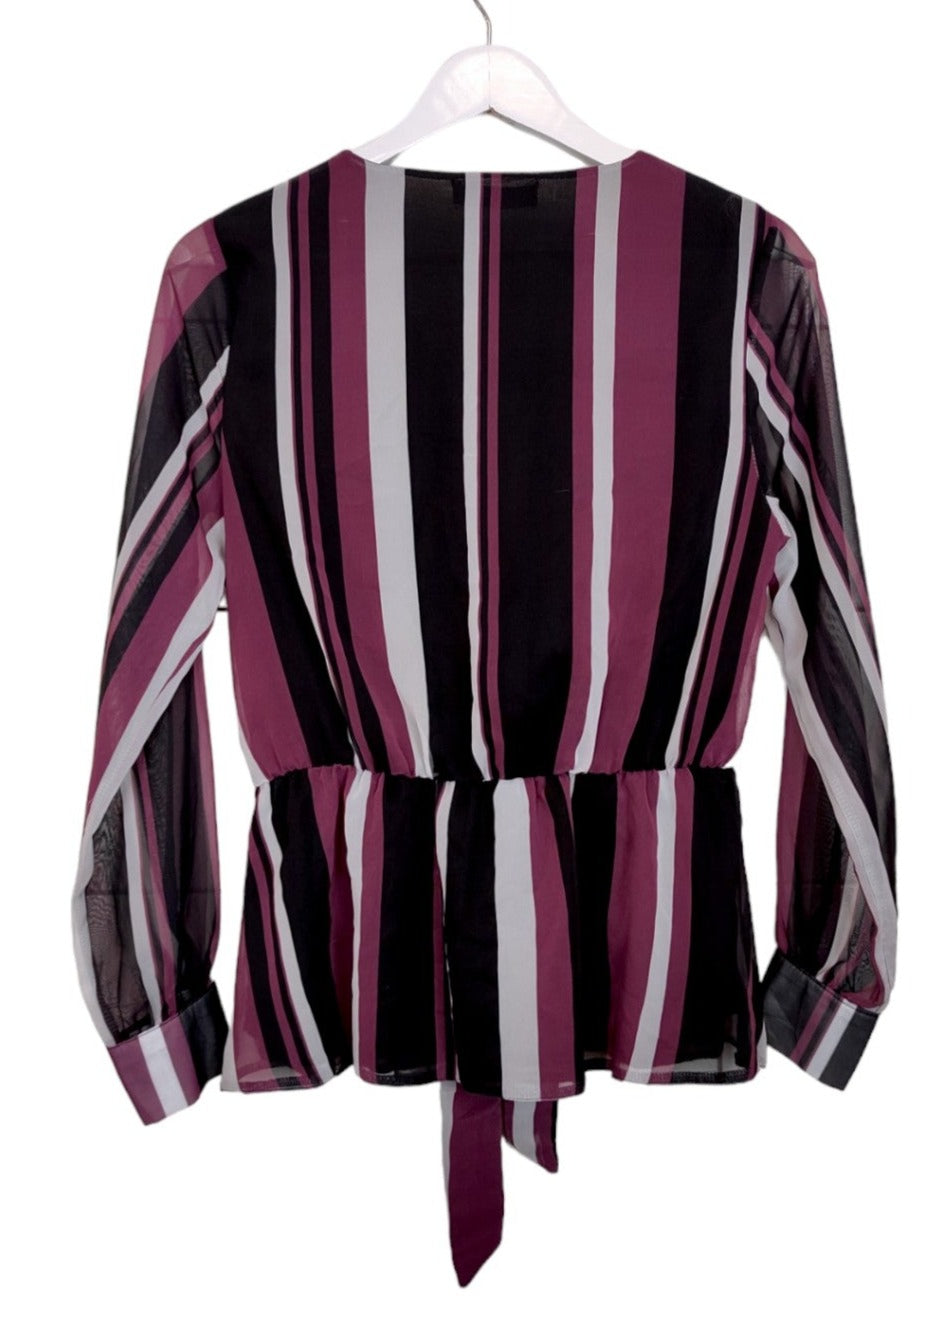 Stock, Ριγέ Μακρυμάνικη Γυναικεία Μπλούζα σε Μαύρο - Μπορντώ χρώμα (Medium)